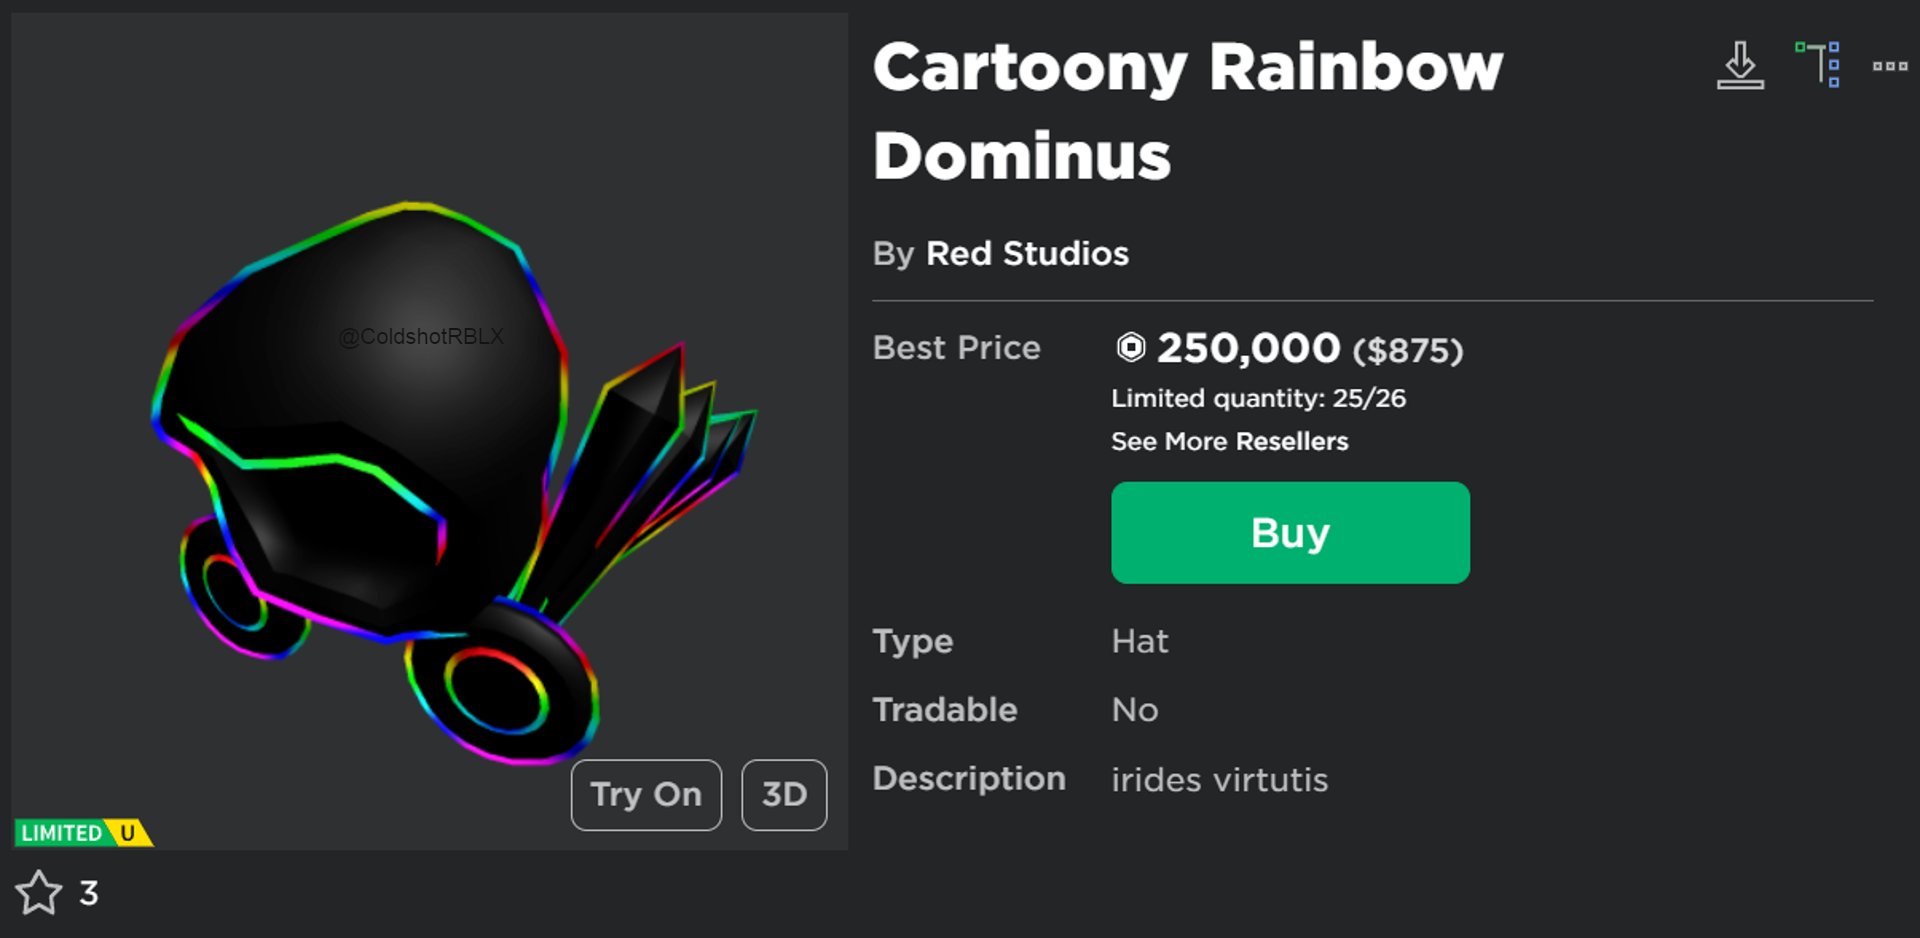 Coldshot on X: 💀someone really made a cartoony rainbow dominus